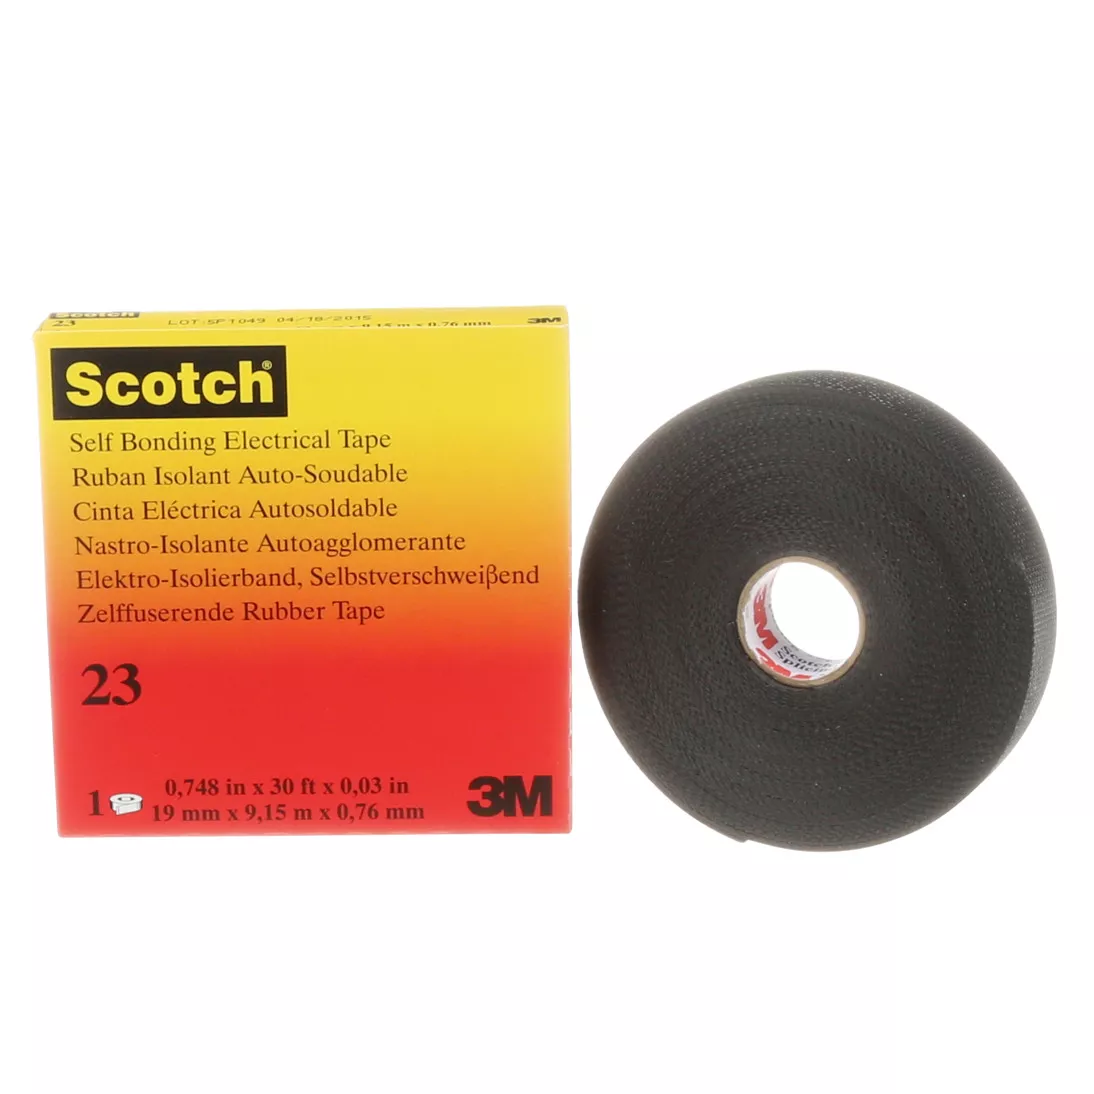 Scotch® Rubber Splicing Tape 23, 3/4 in x 30 ft, Black, 1 roll/carton,
20 rolls/case